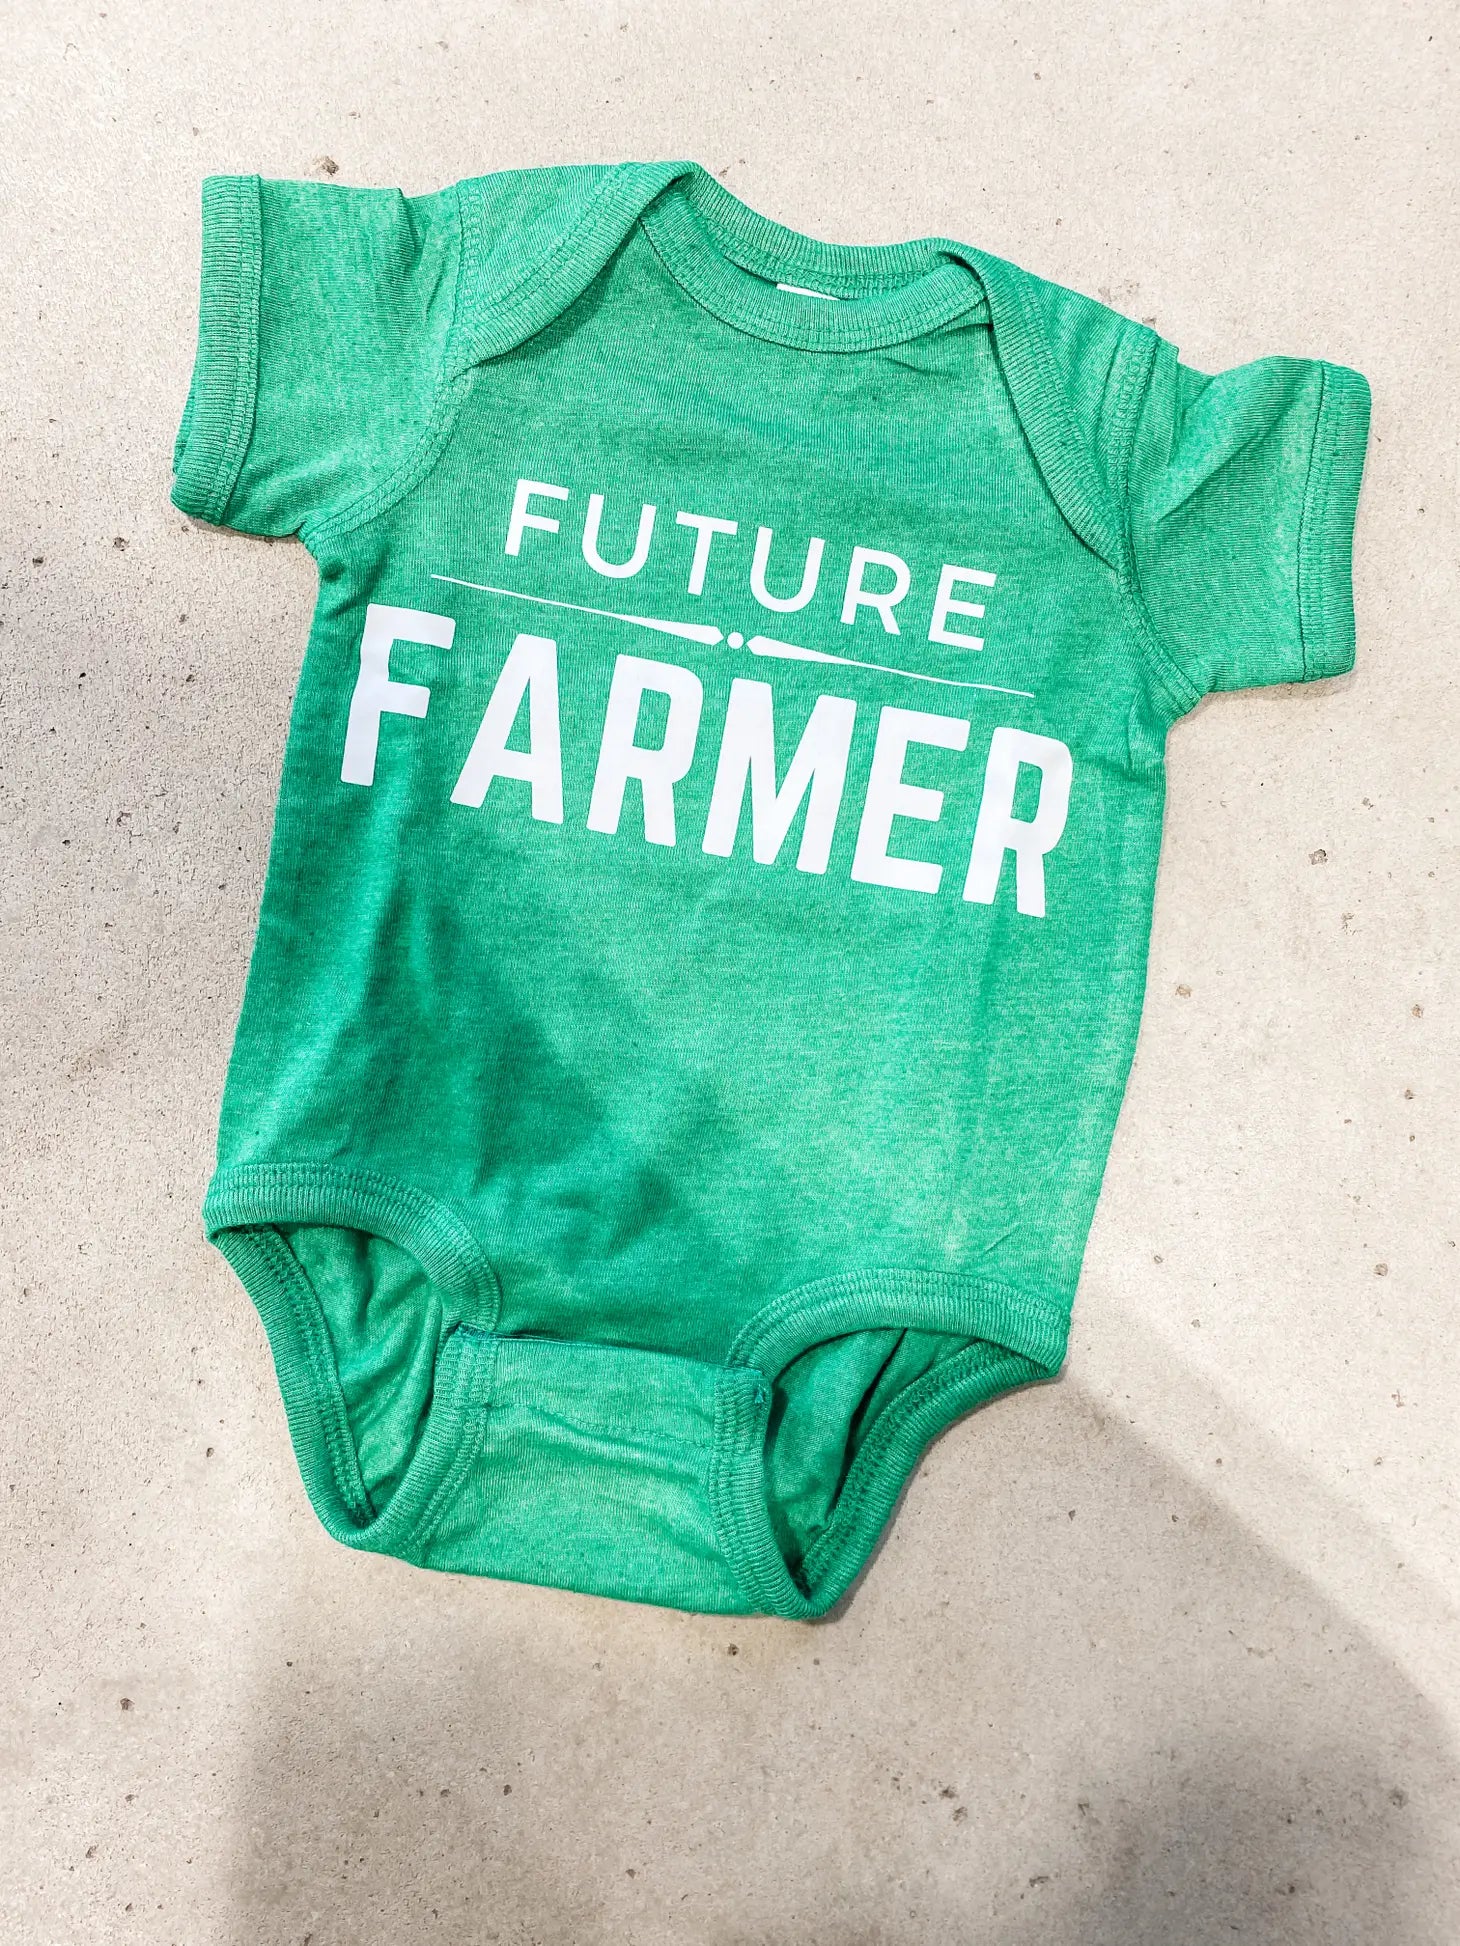 'Future Farmer' Little Kids Tee